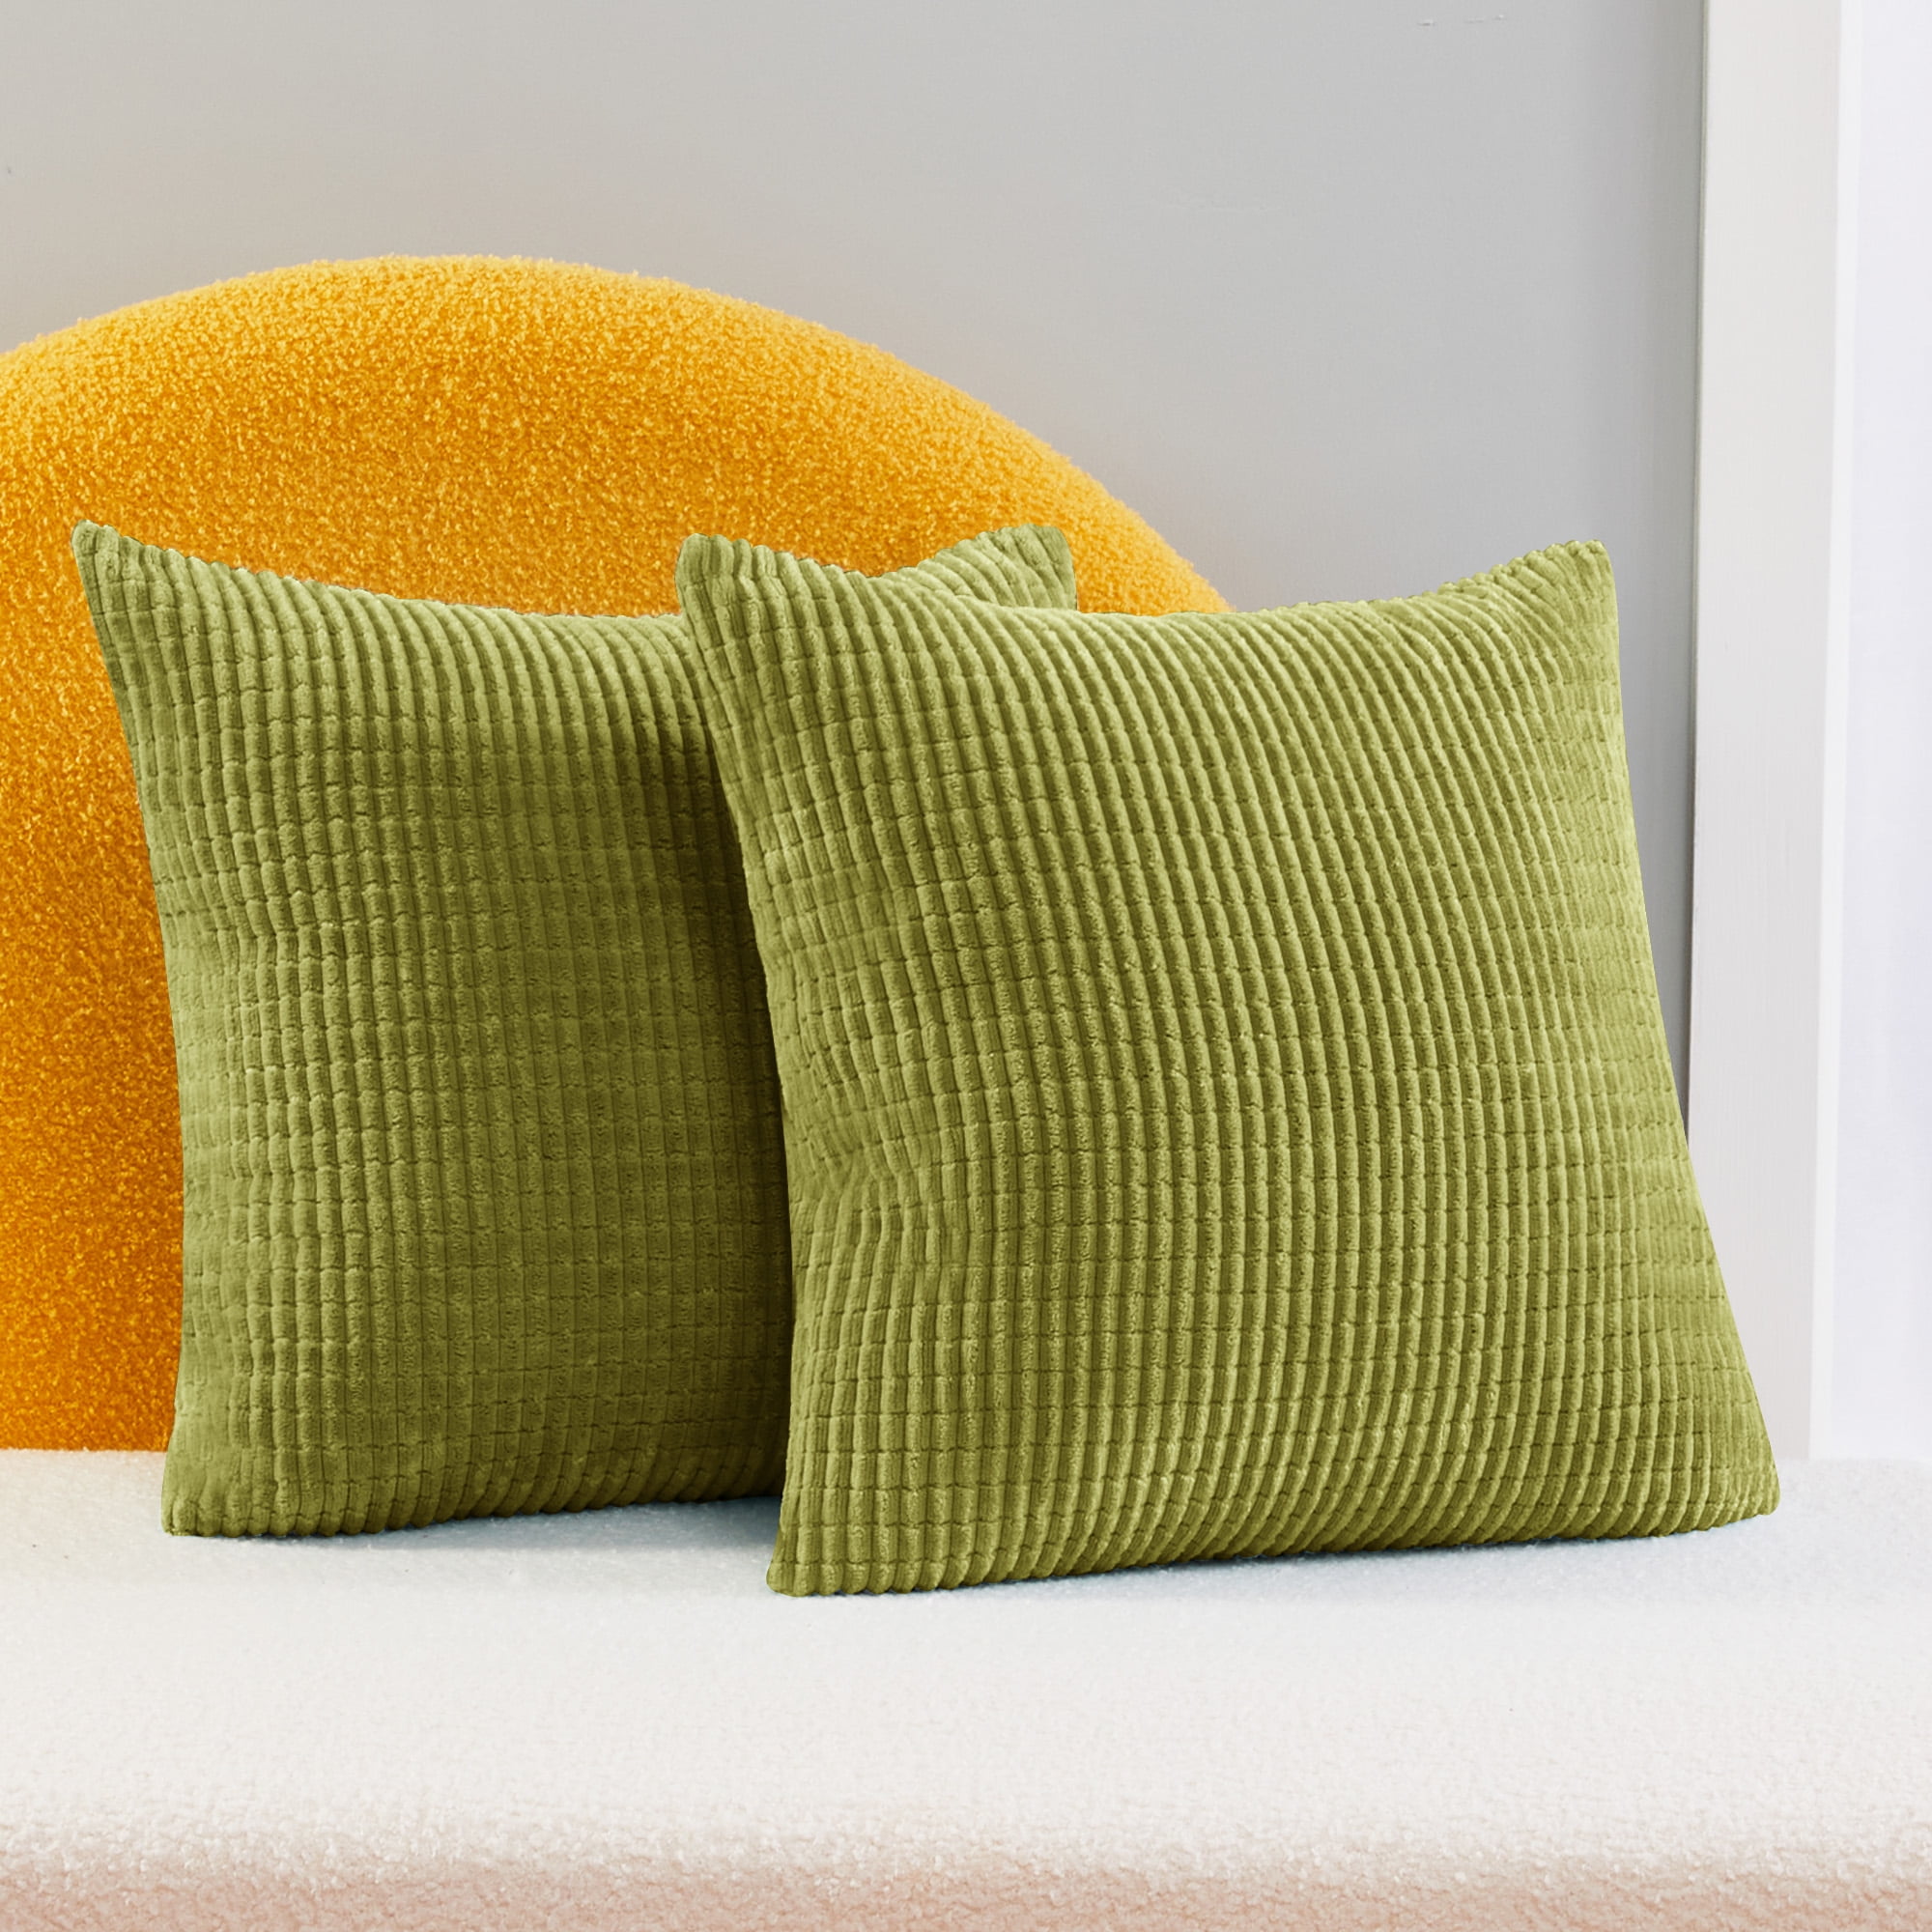 Rectangle Yellow Pillow Cases Sofa Car Waist Throw Cushion Cover Home Decor Gift